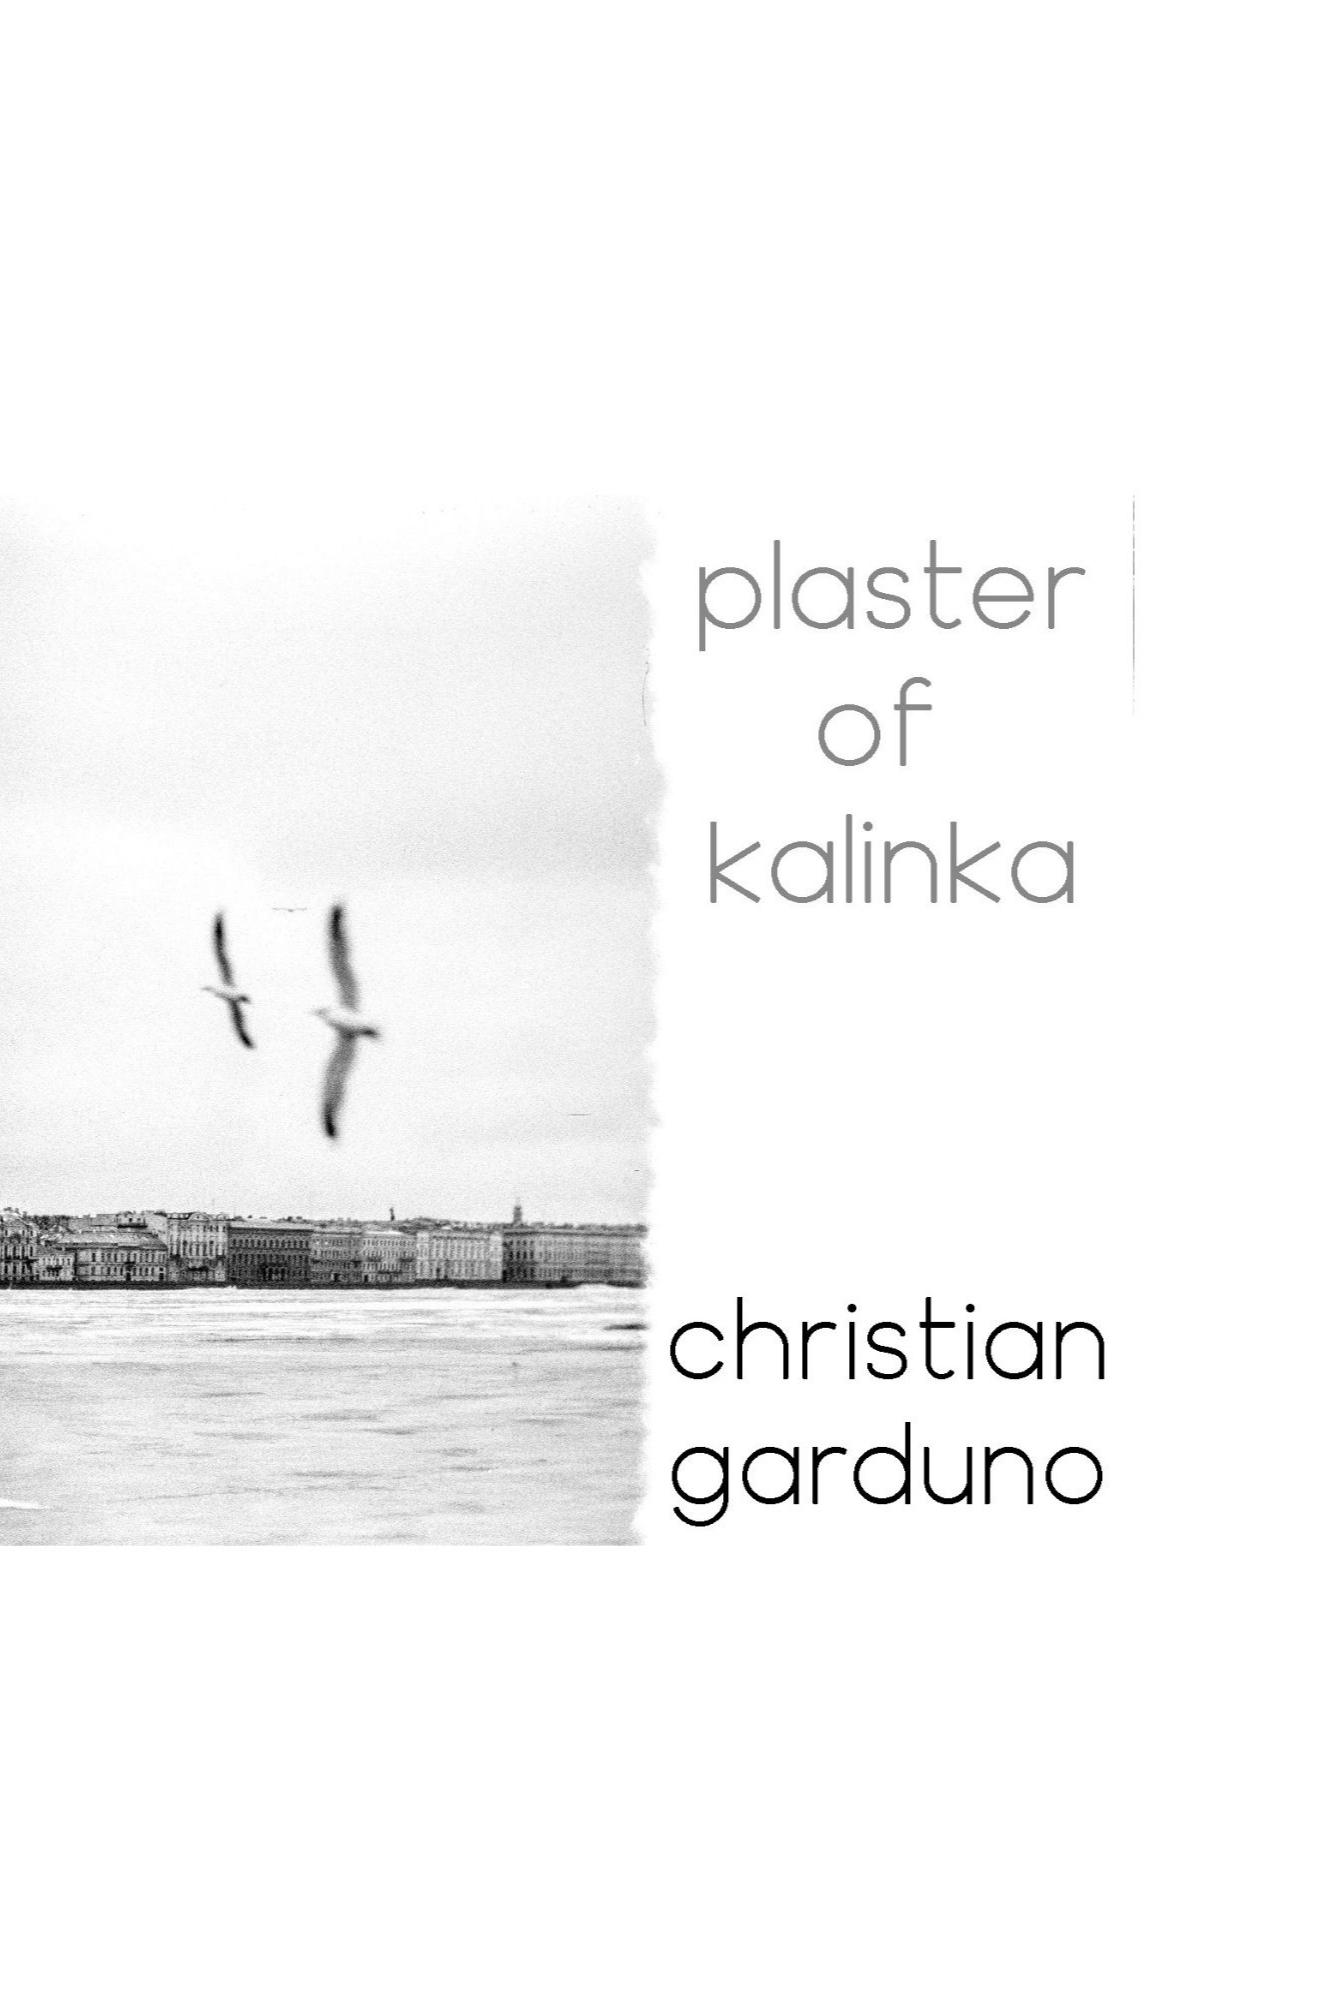 Book cover of Plaster of Kalinka by Christian Garduno